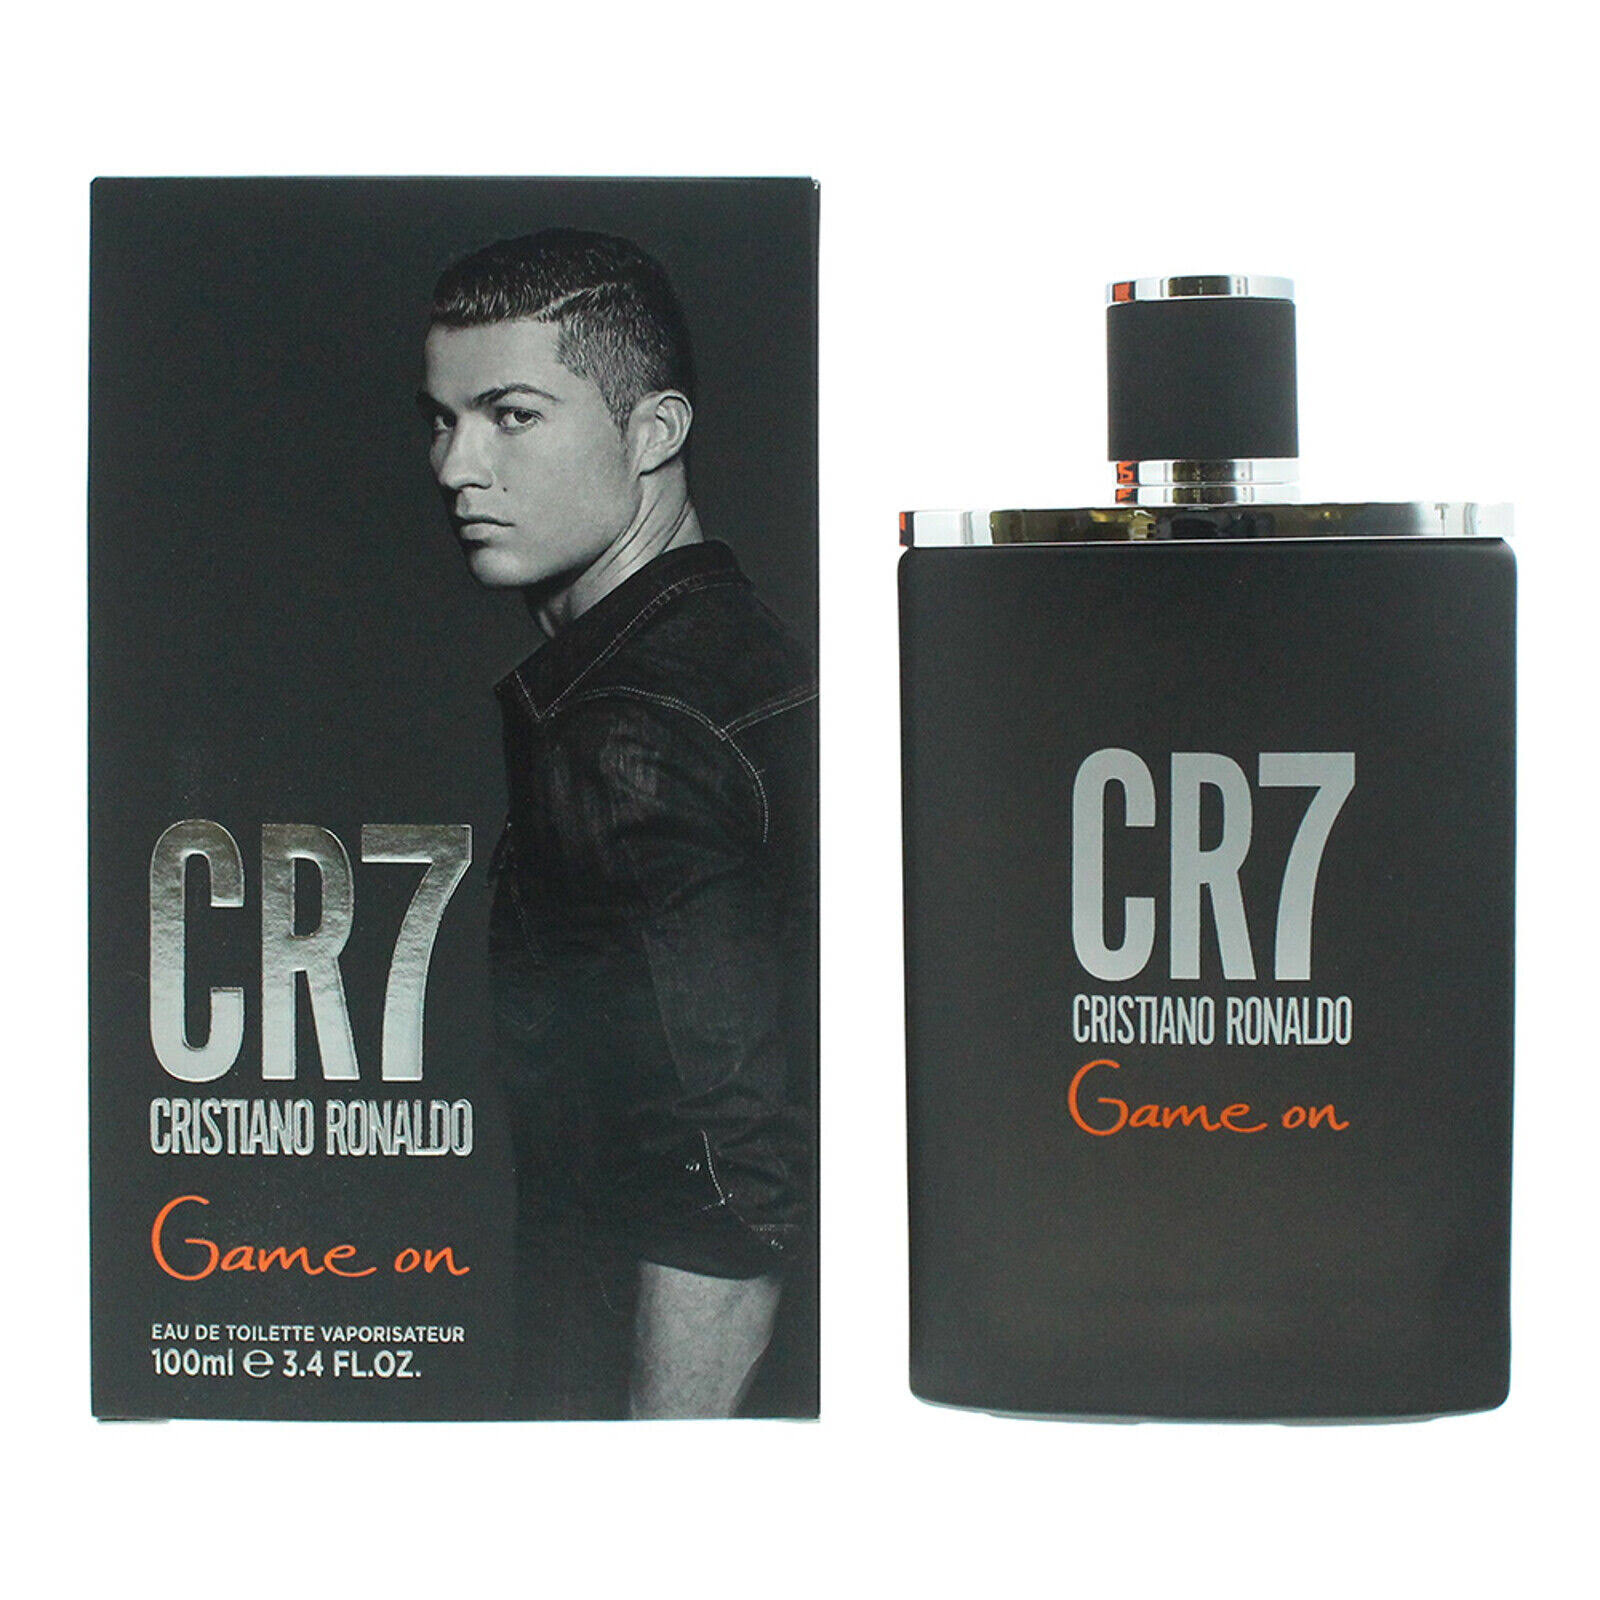 CR7 Game On Eau de Toilette Spray by Cristiano Ronaldo - 100 ml